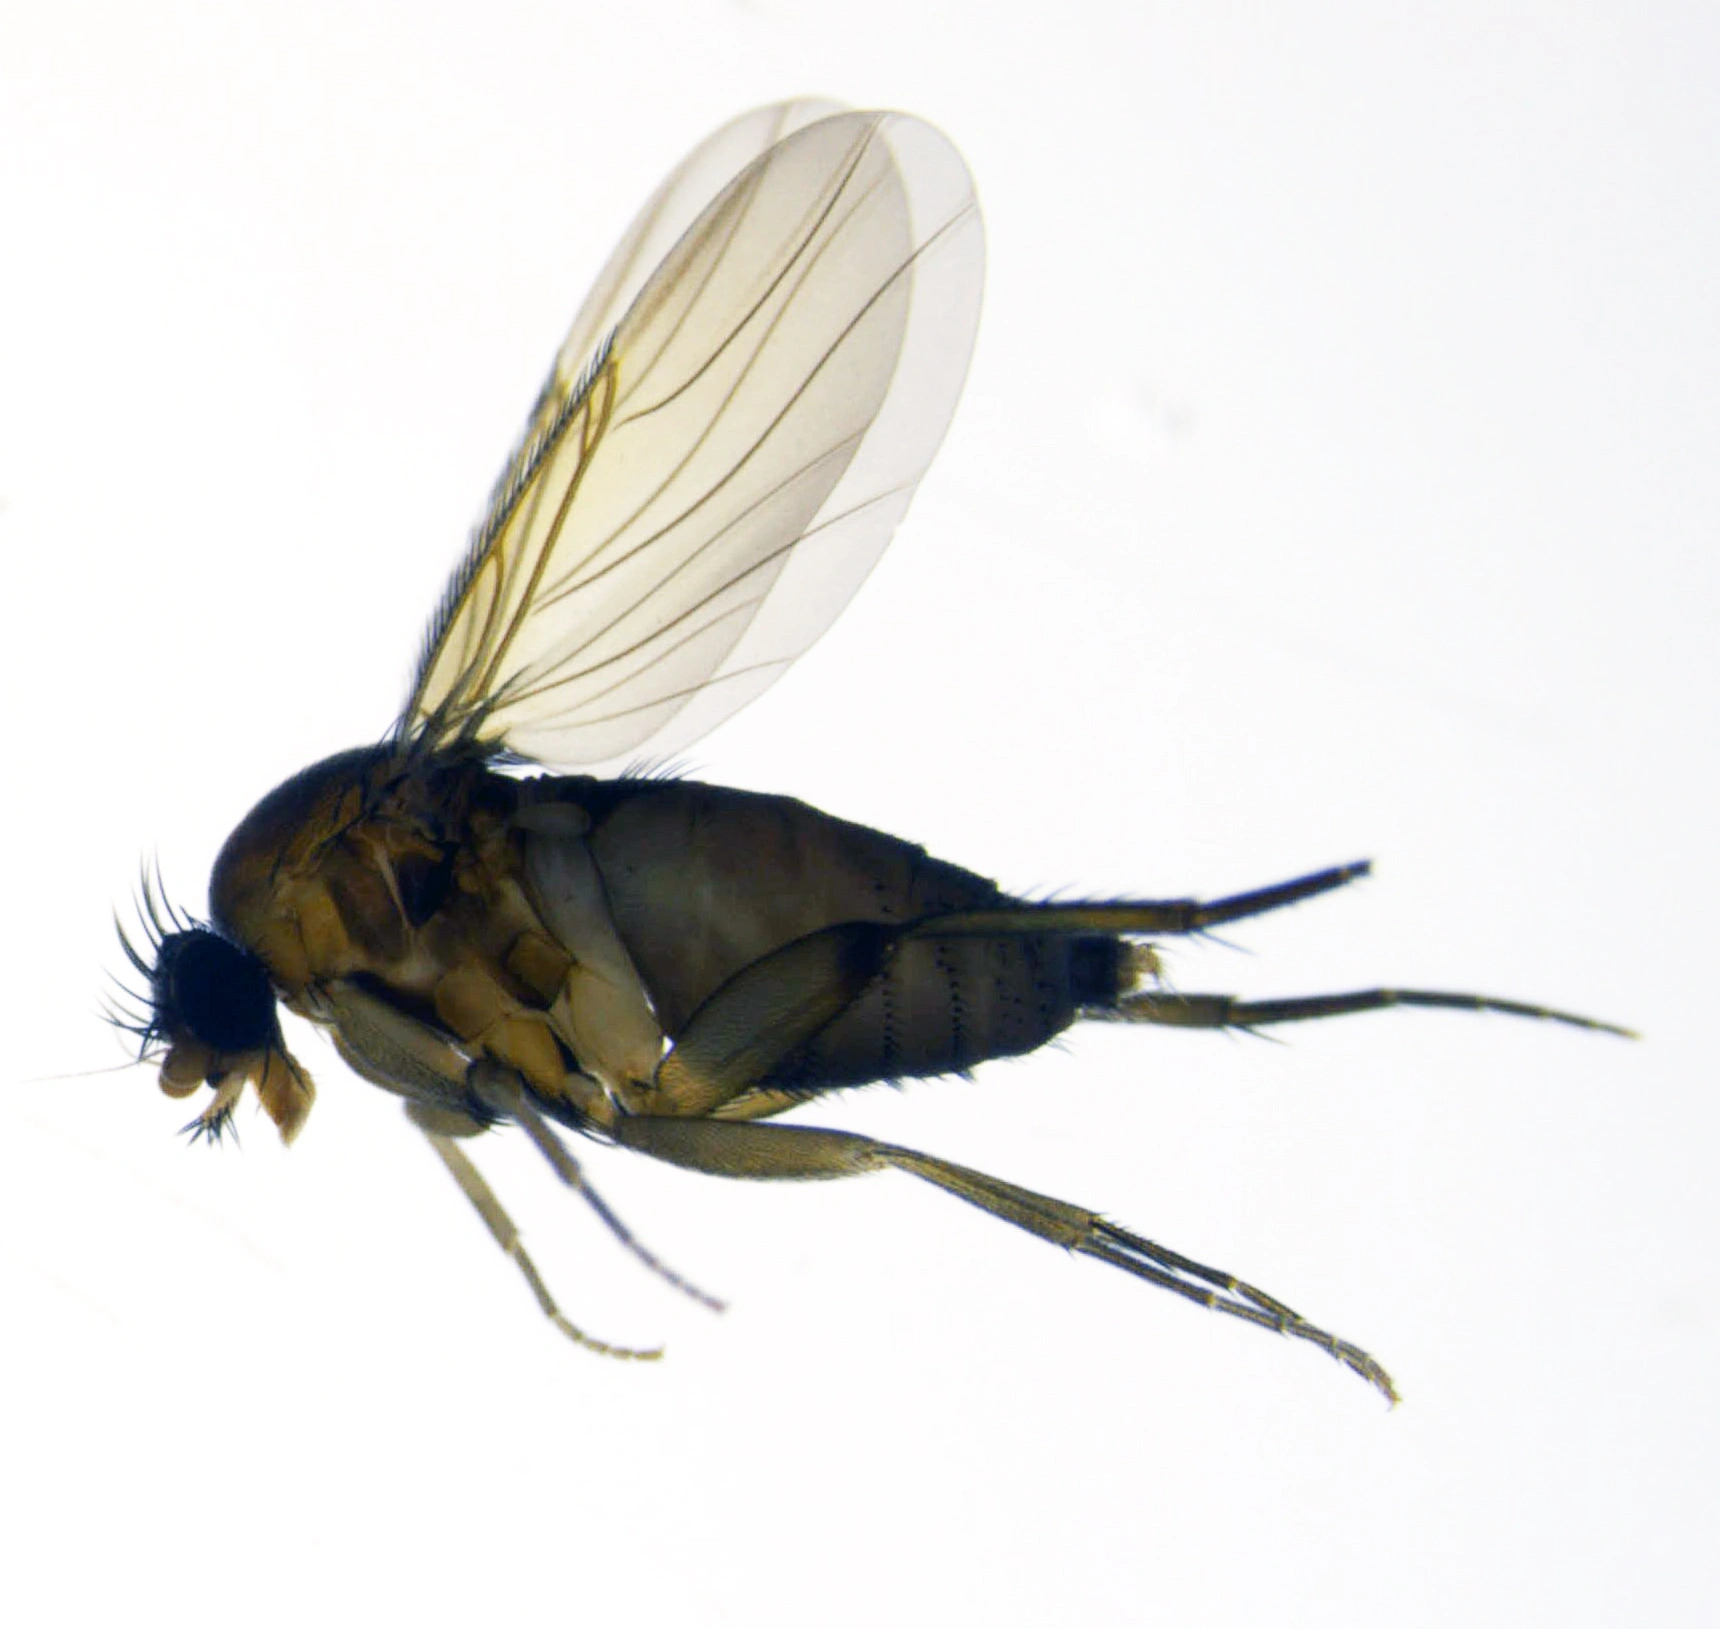 : Megaselia ruficornis.